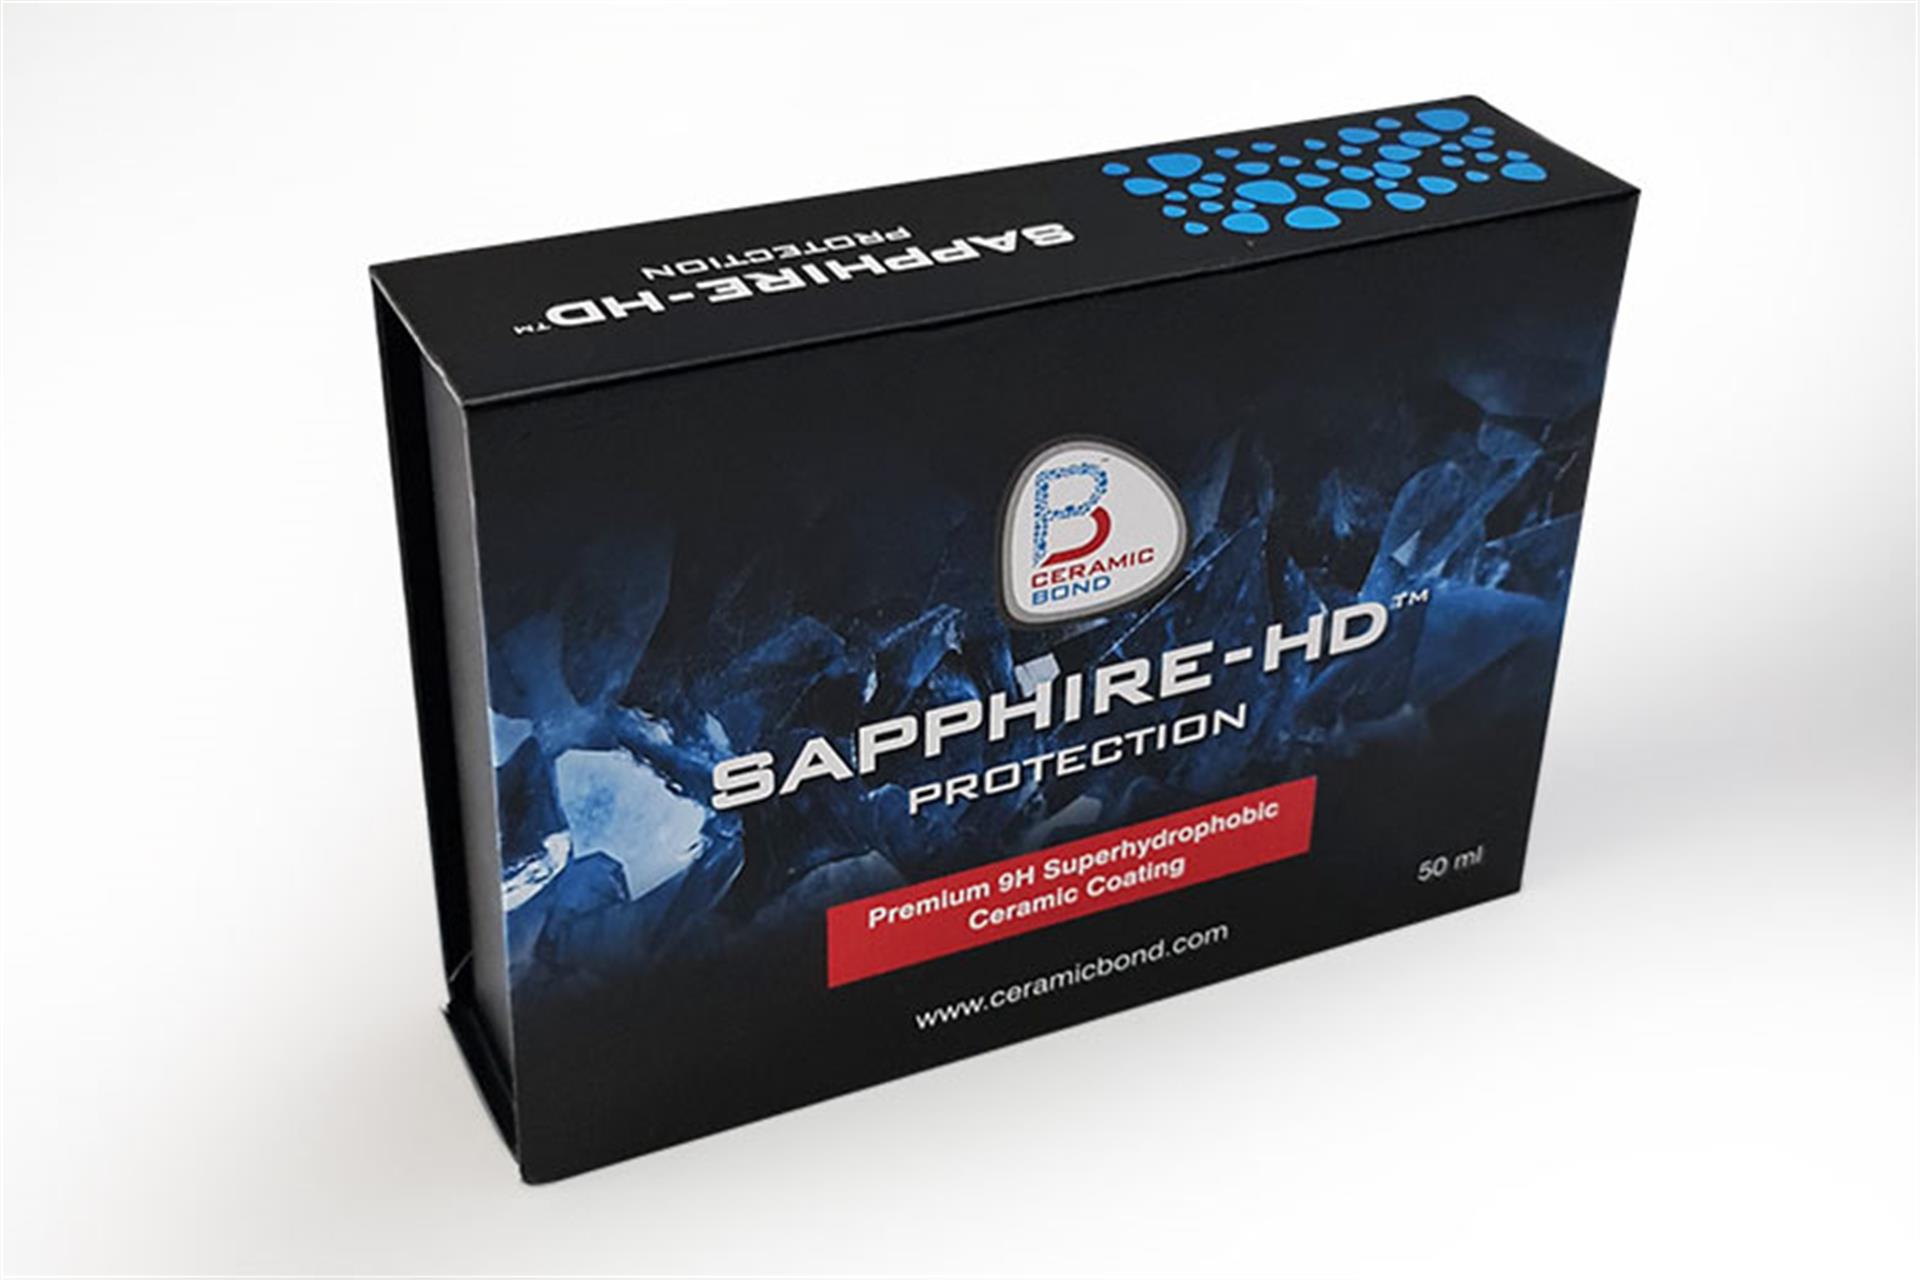 SAPPHIRE-HD™ (Kit)